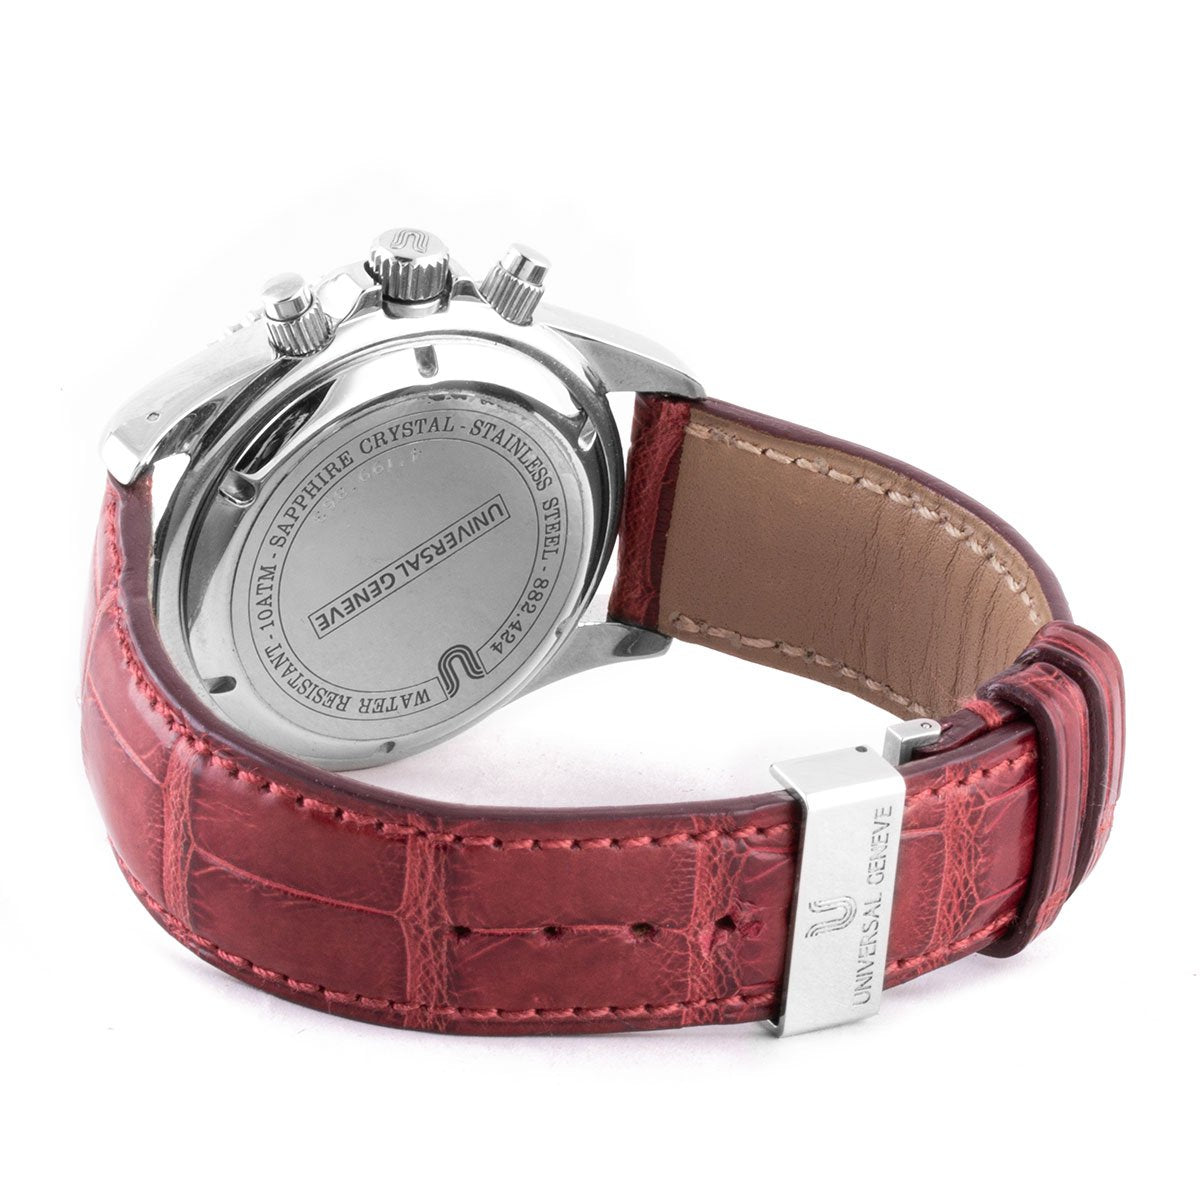 Montre d'occasion - Universal Genève - Aero Compax - 3600€ - watch band leather strap - ABP Concept -